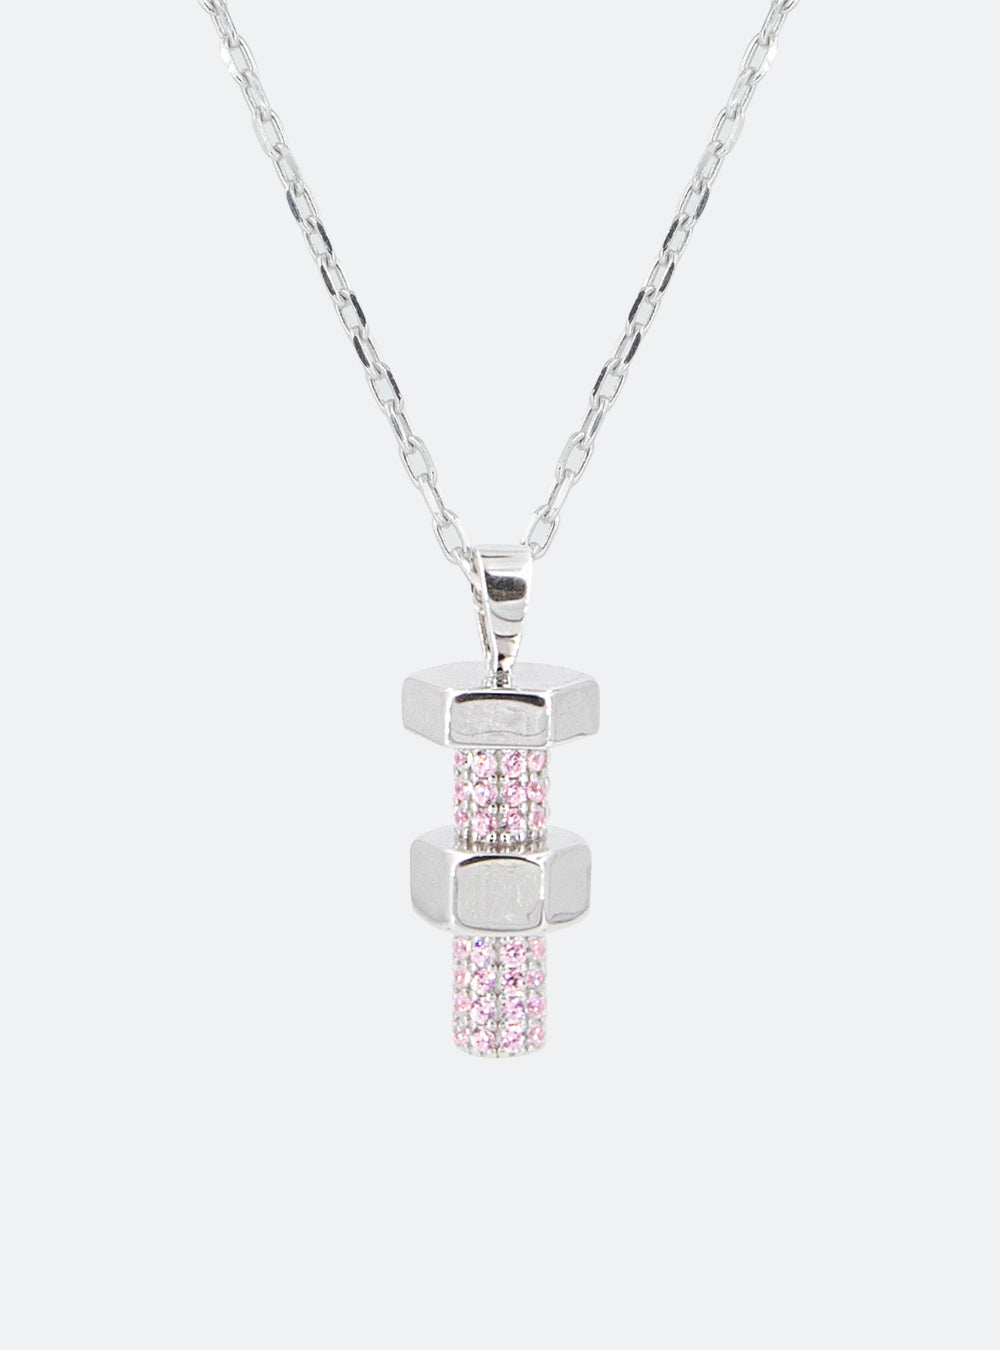 Hexbolt w/ cubic zirconia pendant necklace (Pink)